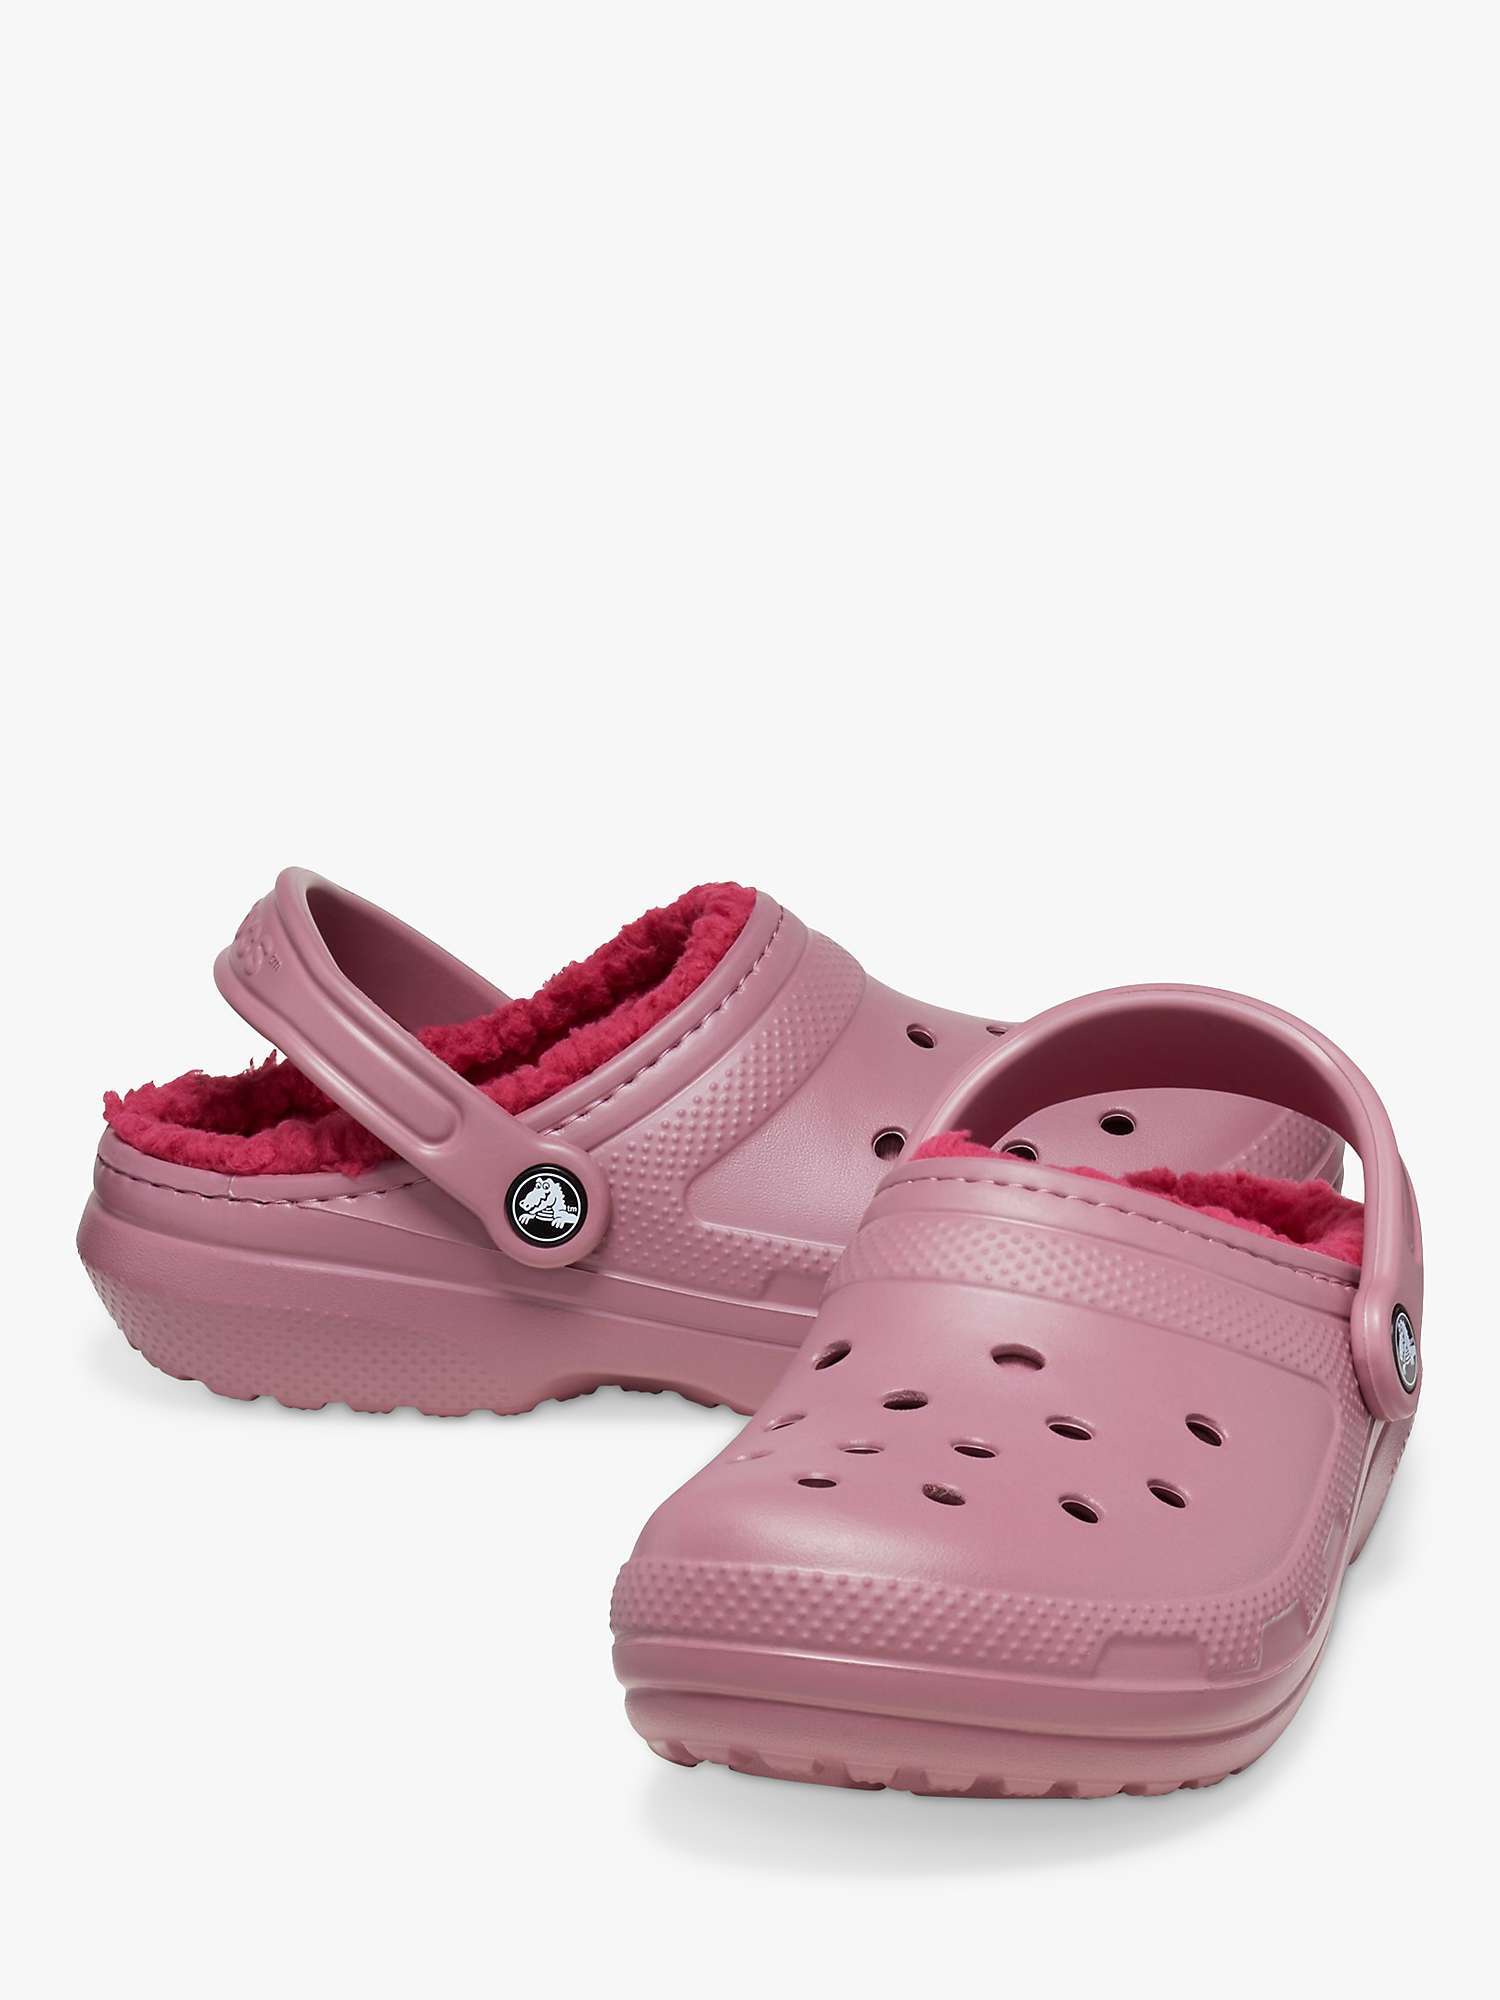 Buy Crocs Classic Lined Clogs, Dark Pink Online at johnlewis.com